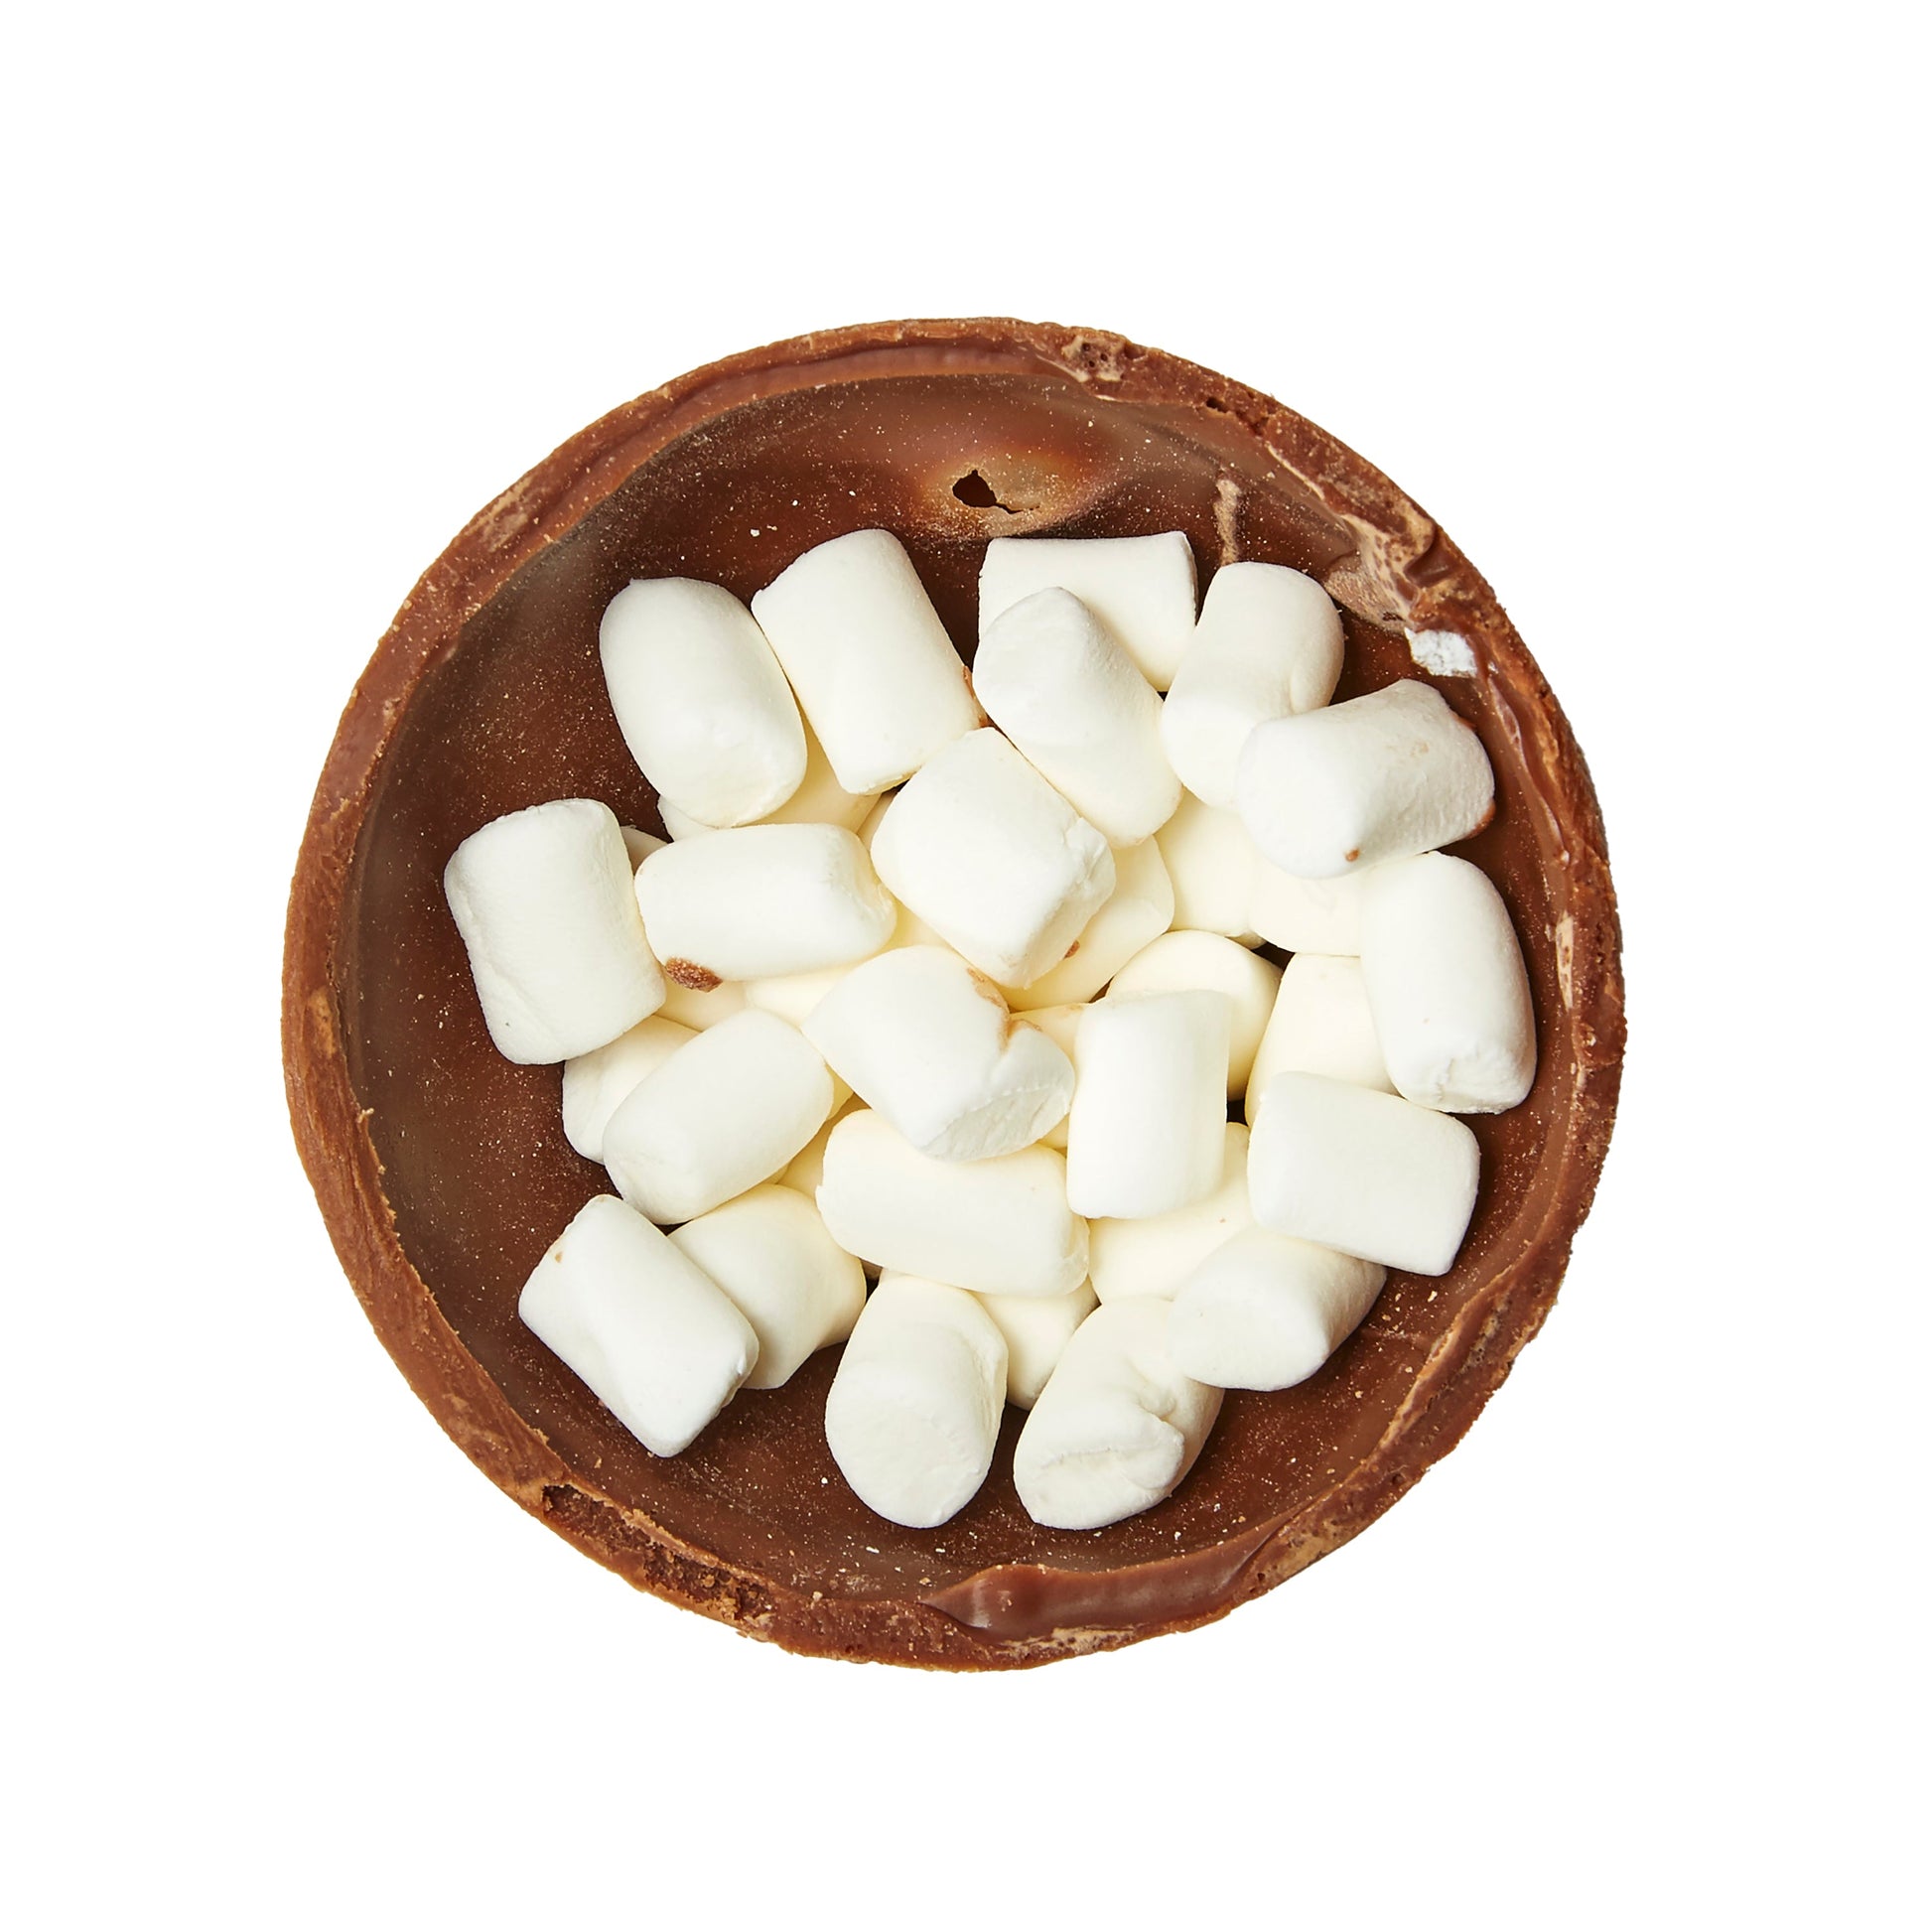 hot coca bomb broken up to show mini marshmallows inside